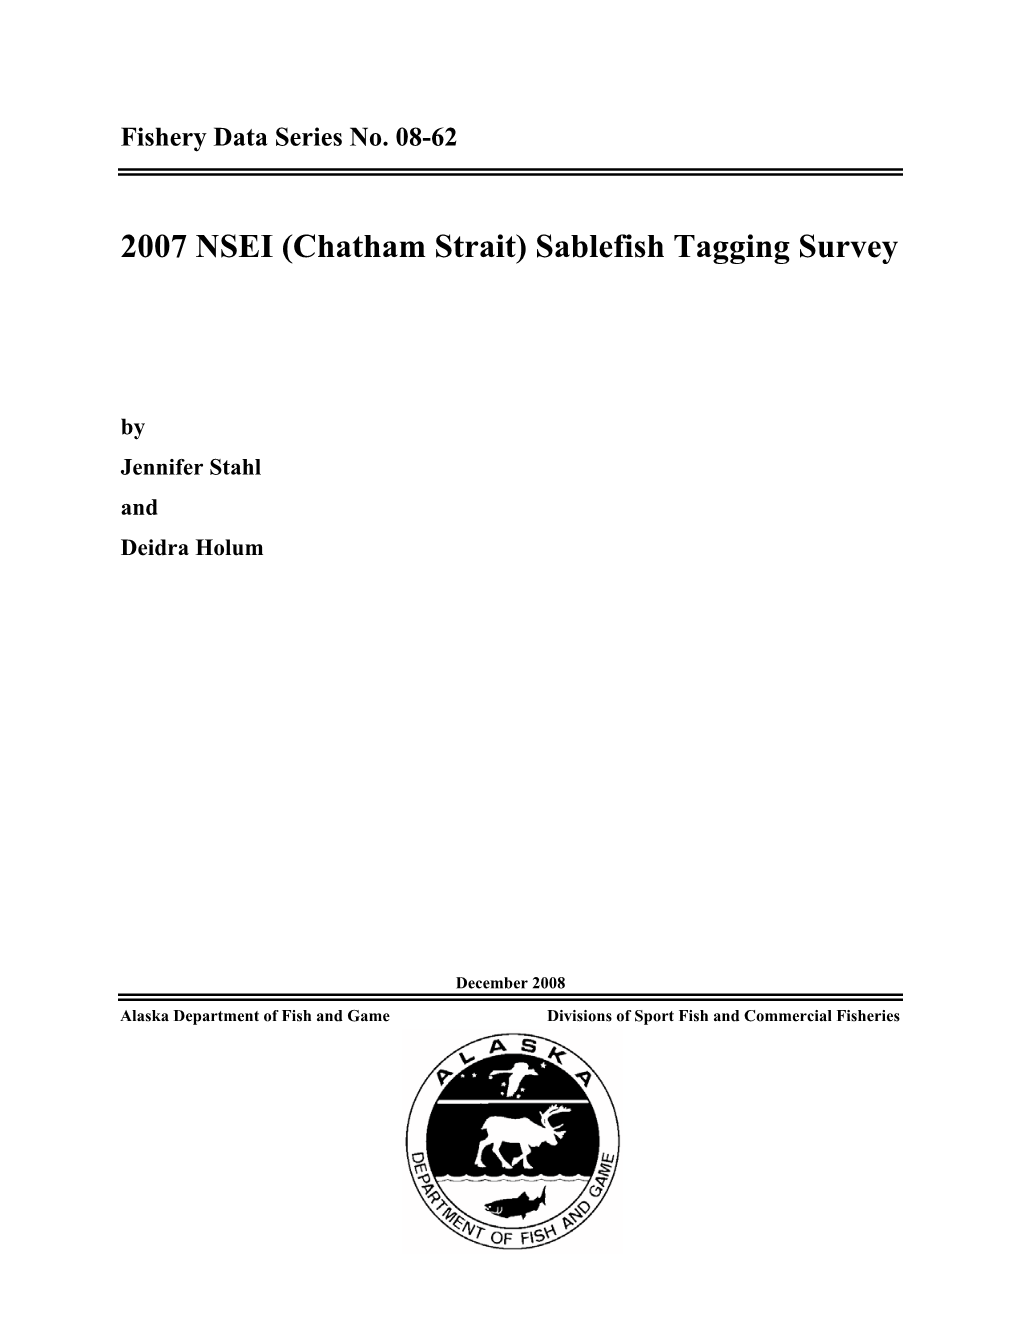 (Chatham Strait) Sablefish Tagging Survey